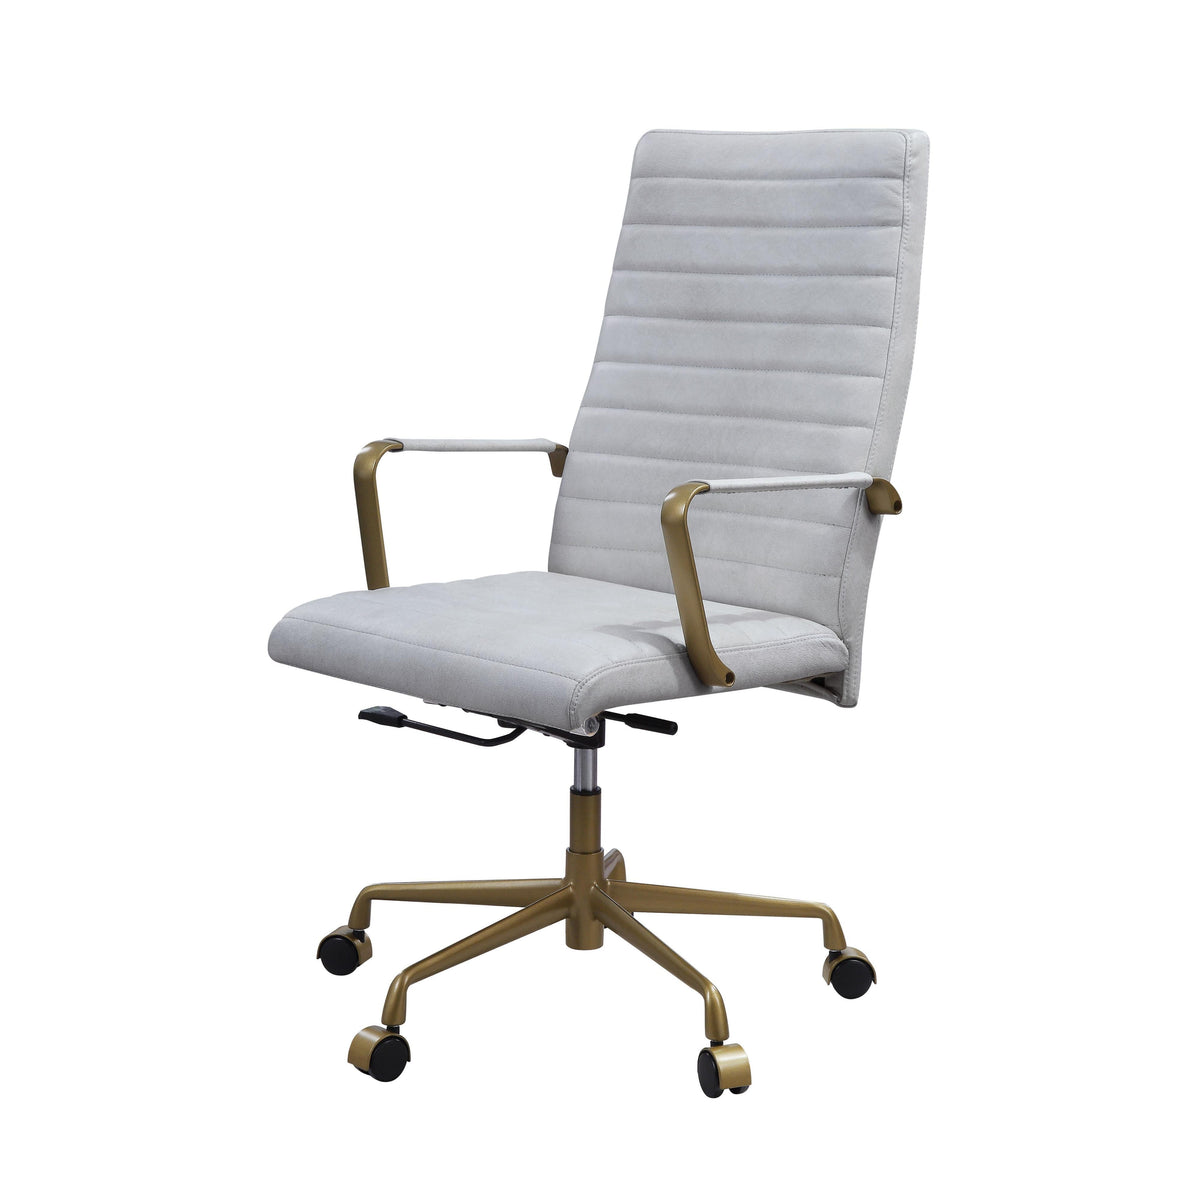 Acme Furniture Duralo 93168 Office Chair